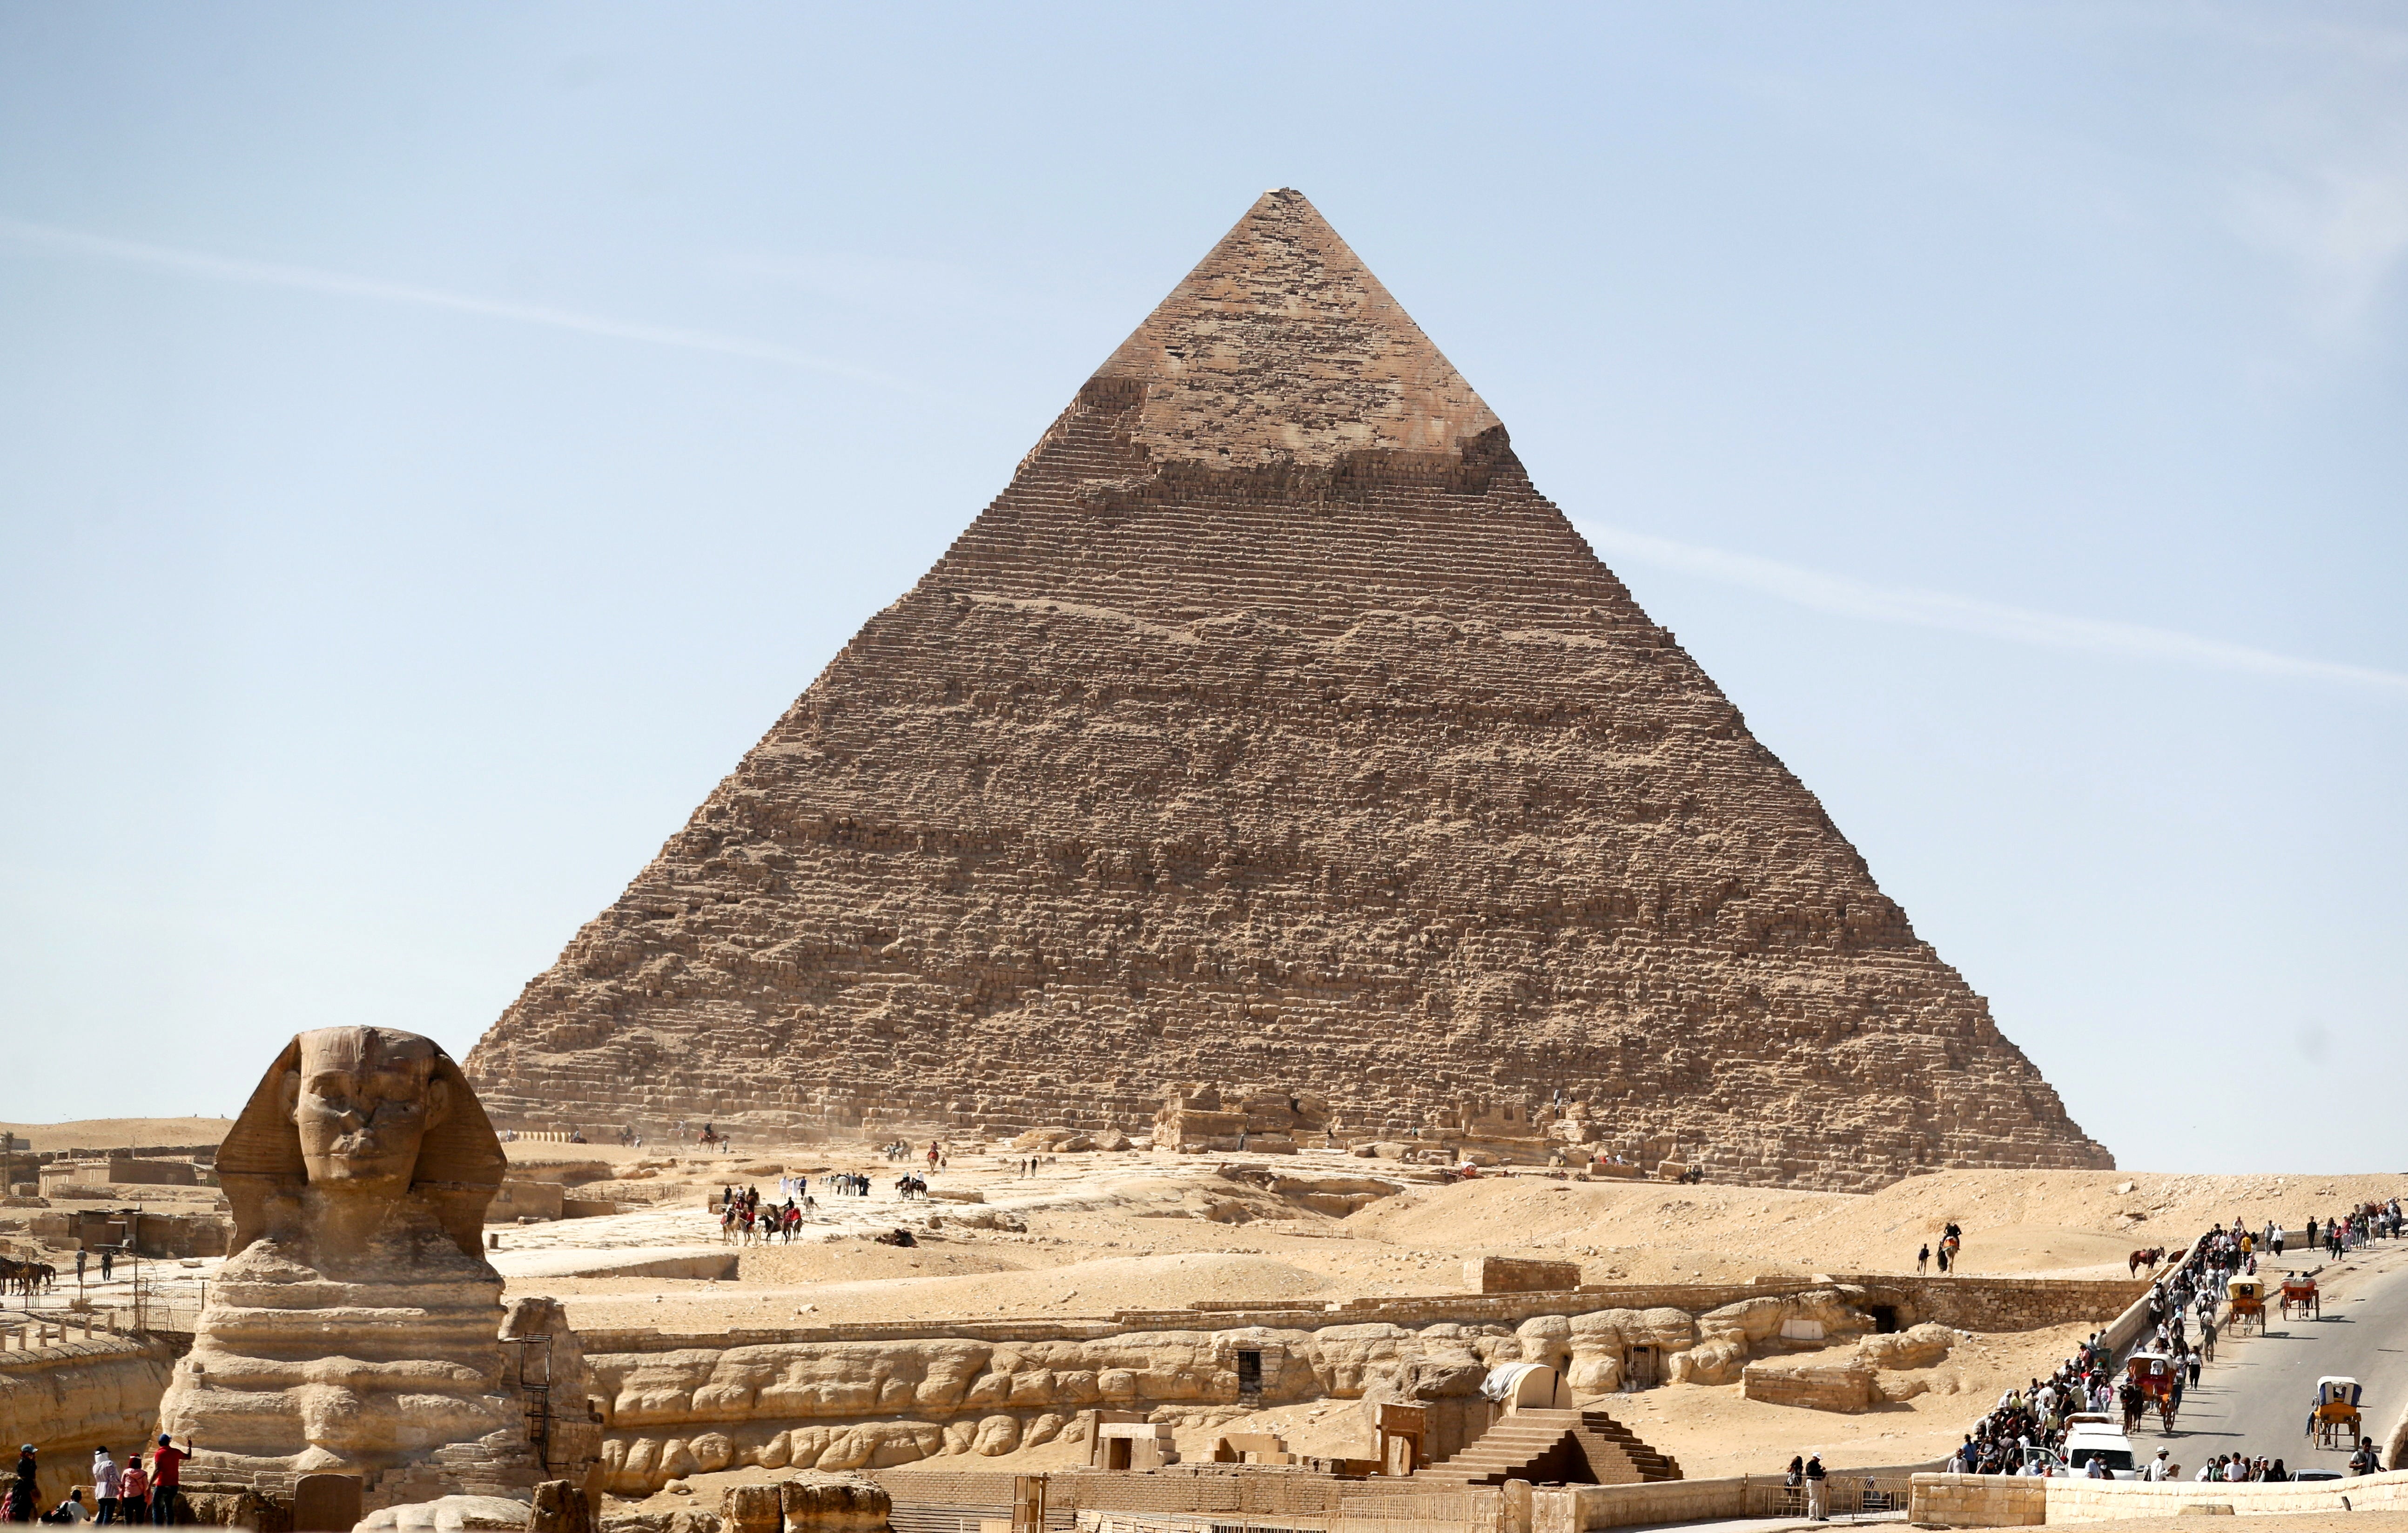 The Pyramid of Giza. How?